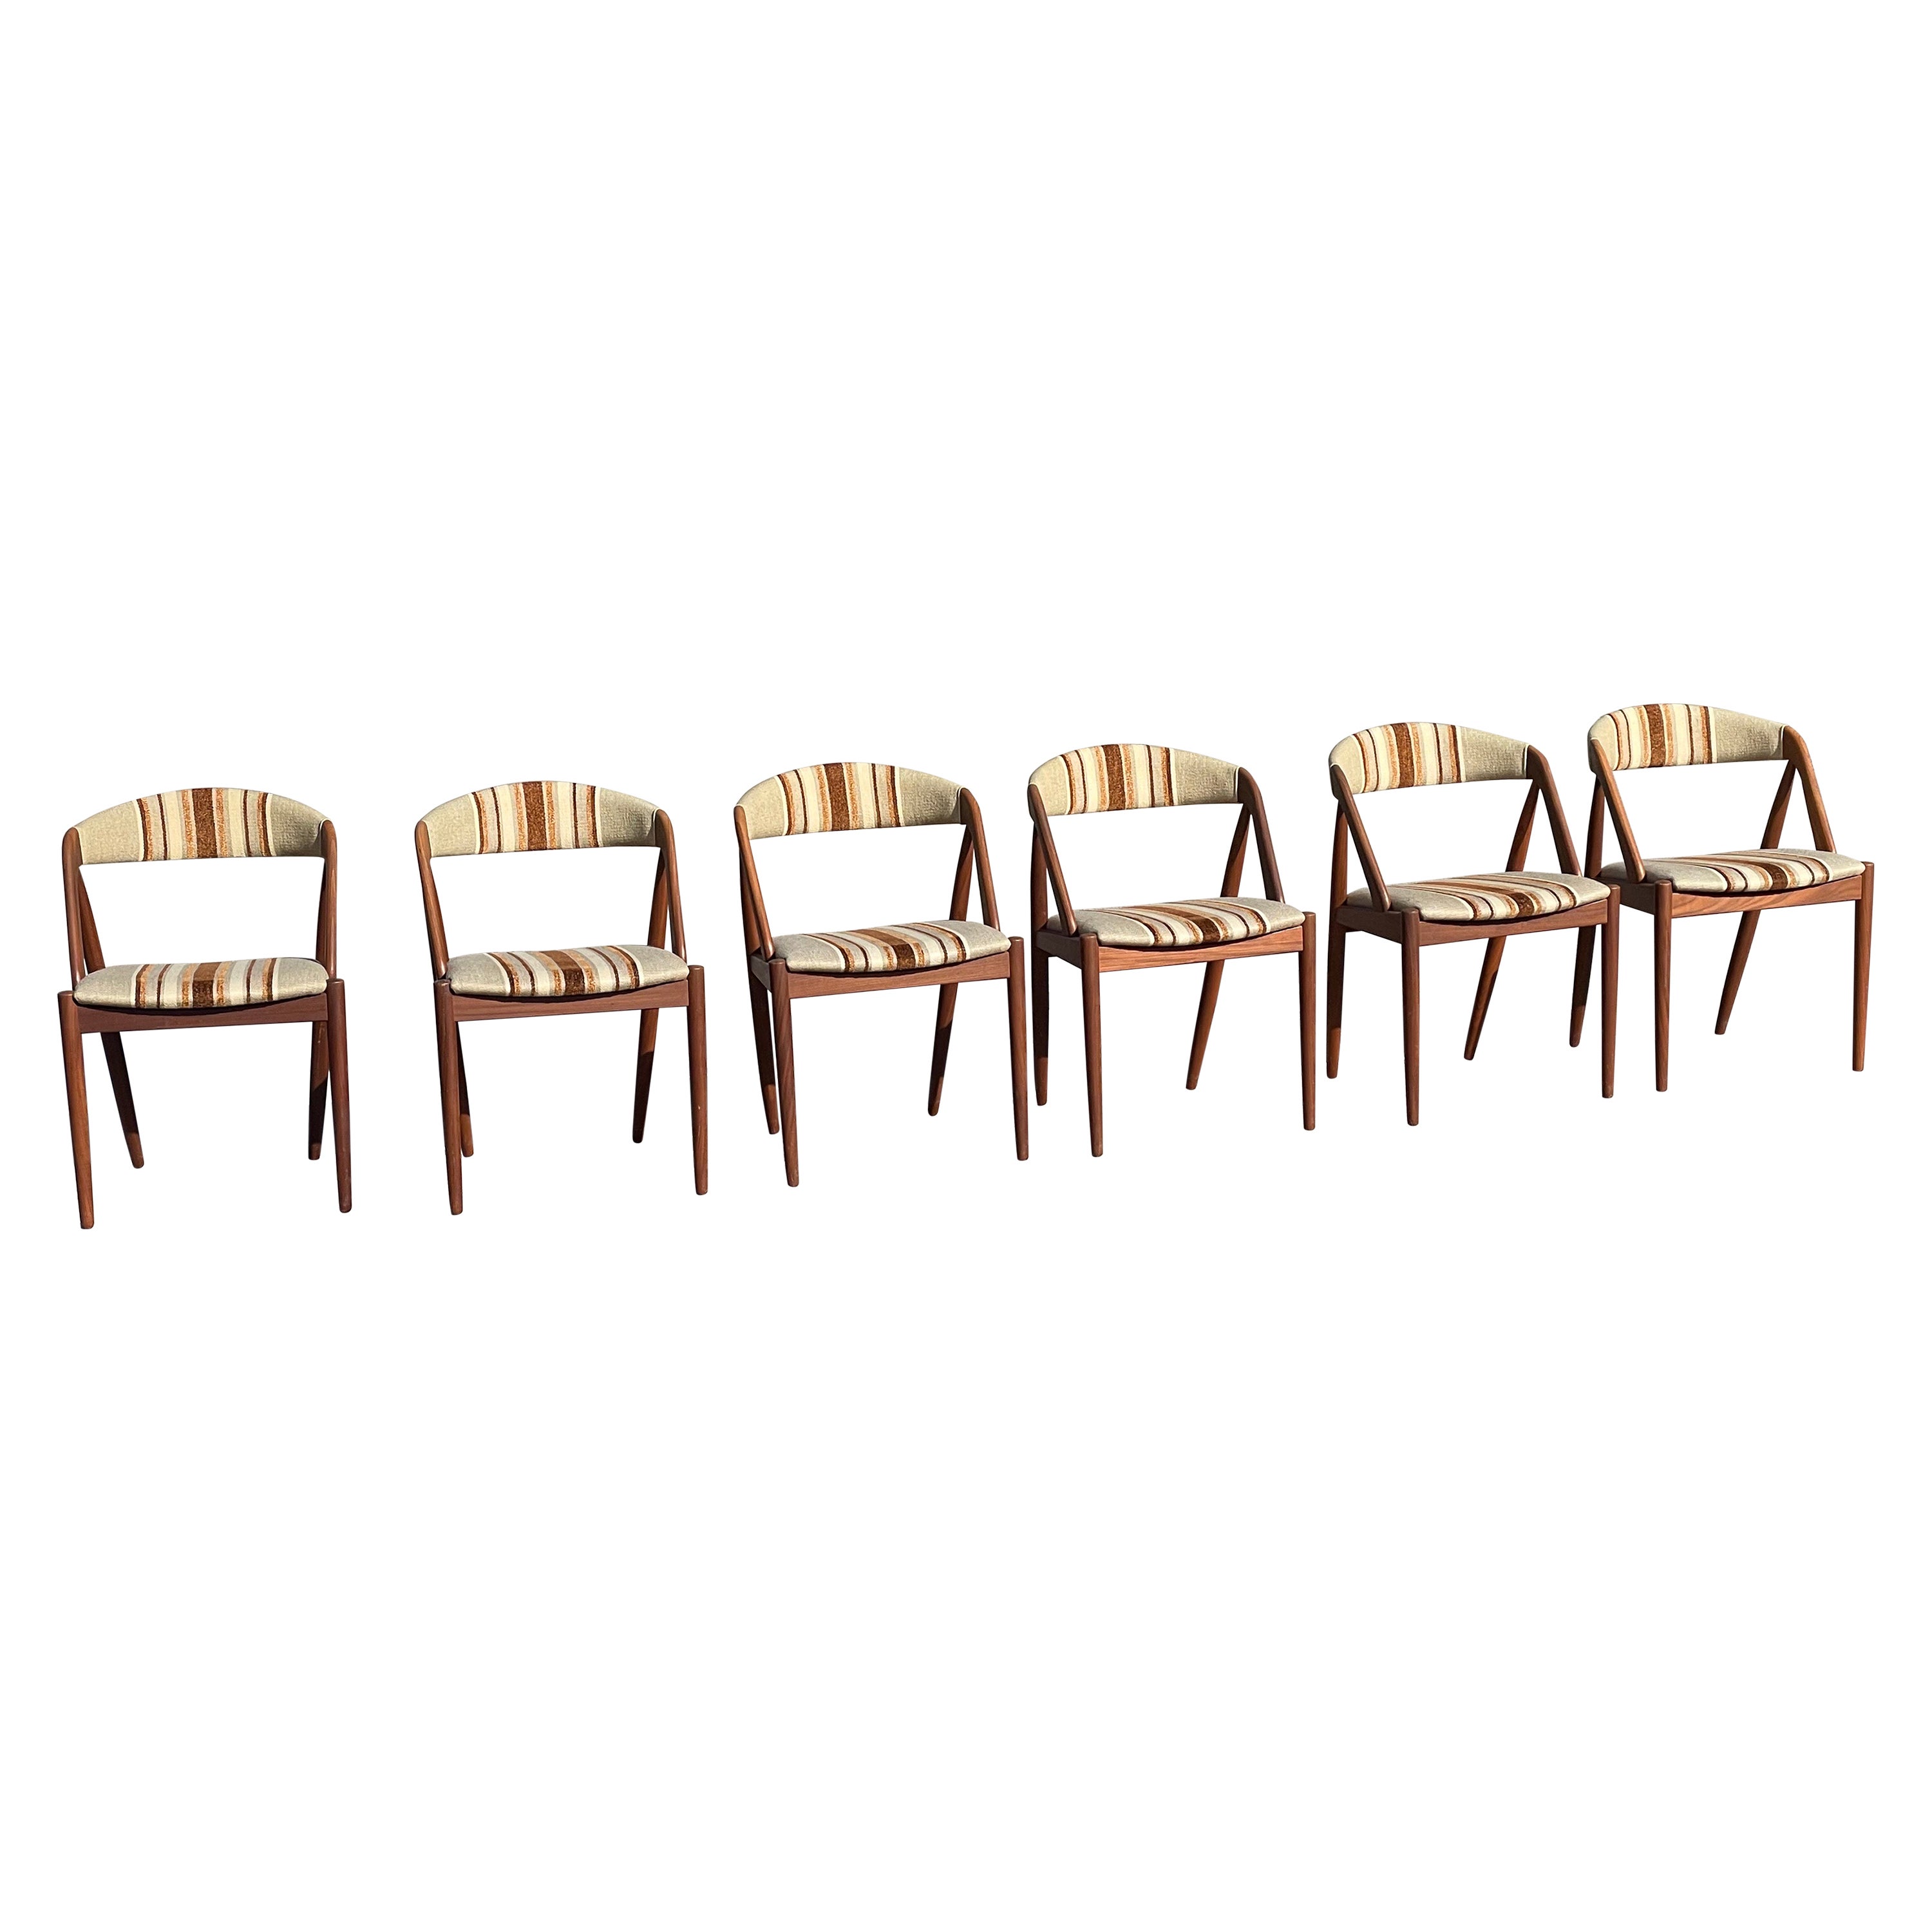 6 Original Kai Kristiansen Teak Dinning Chairs from 1960s For Sale